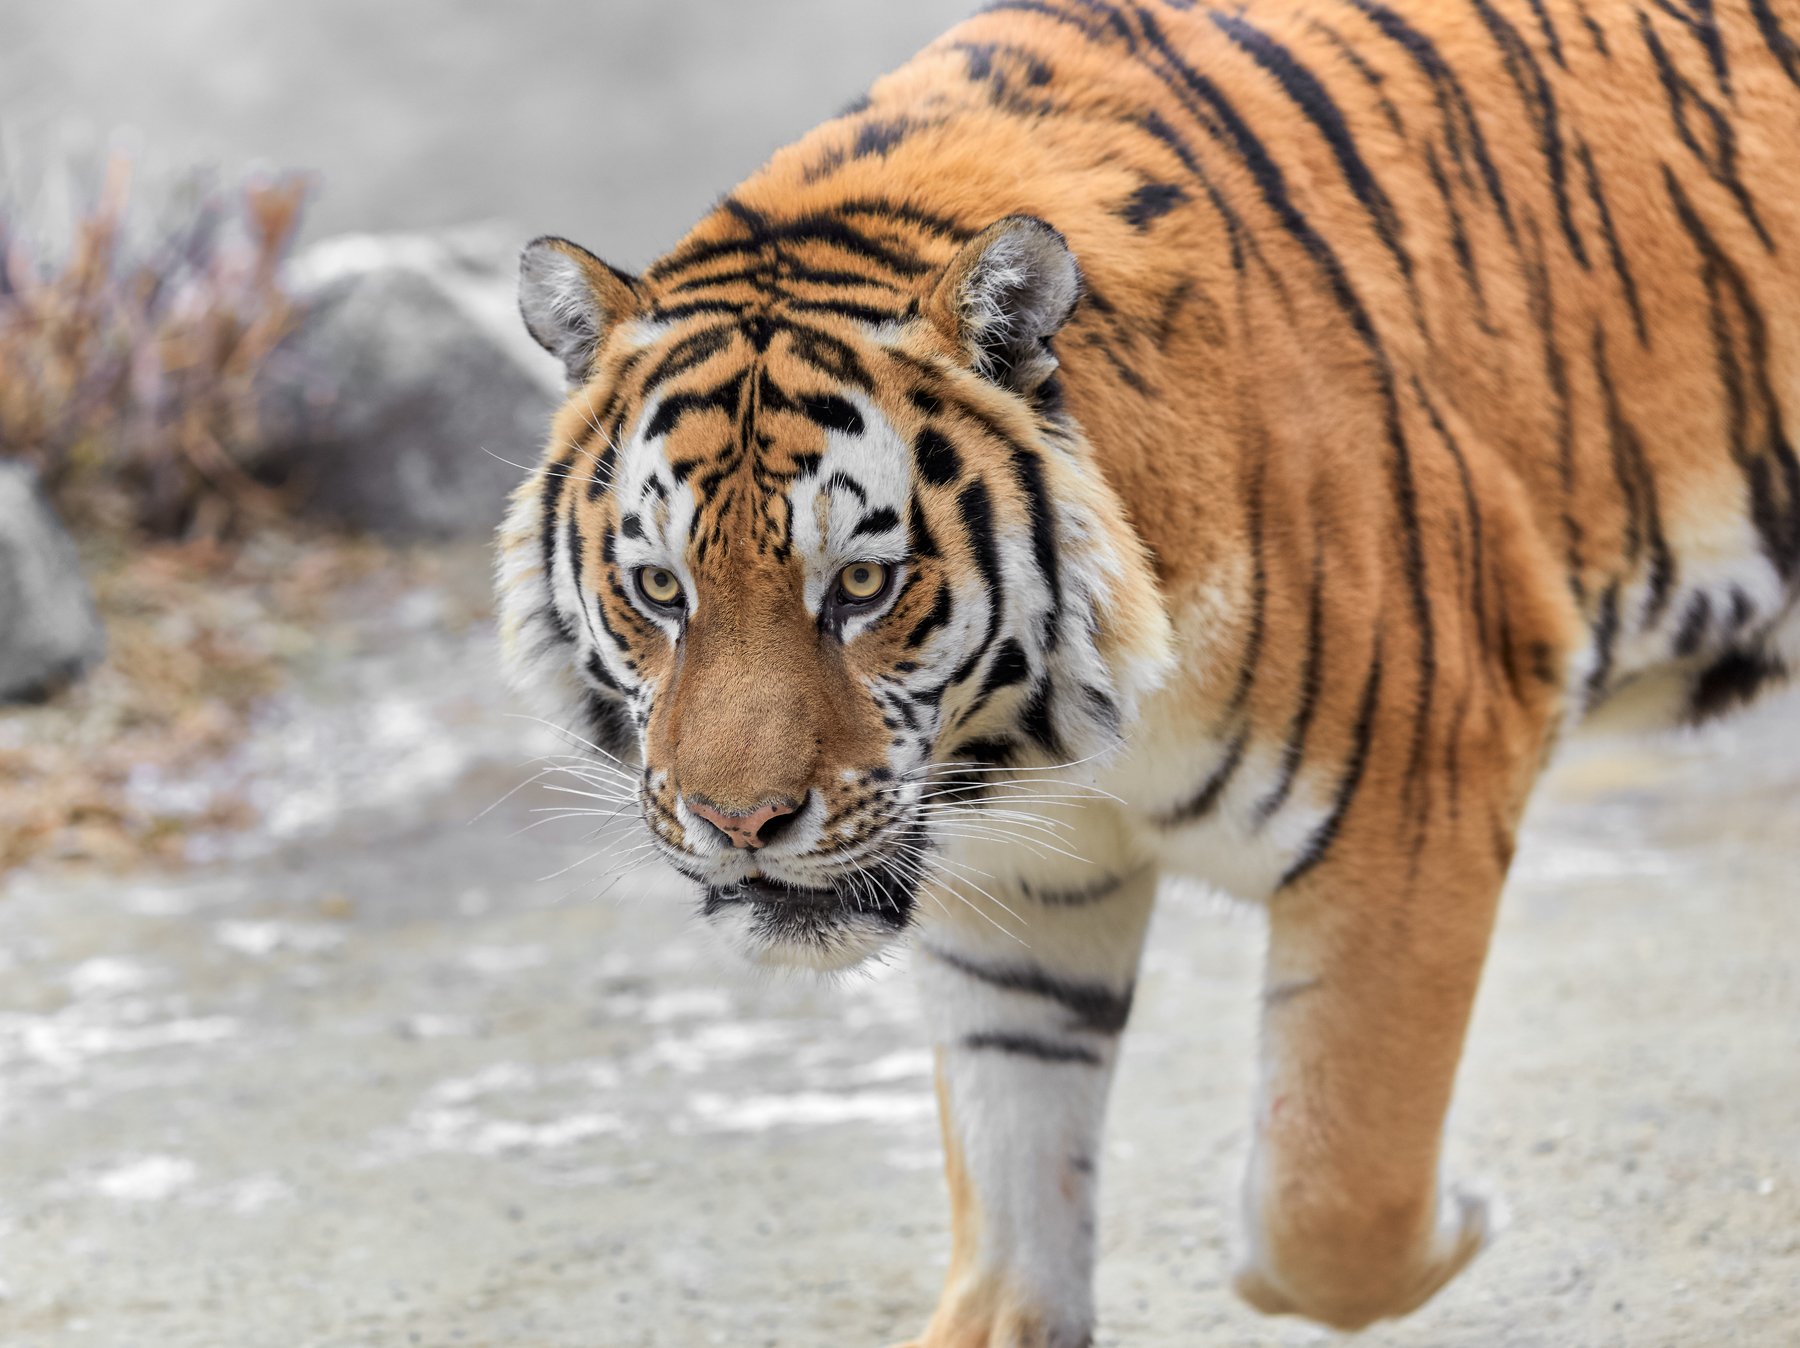 230 кг тихой ярости (амурский тигр). Фотограф Богданов Олег